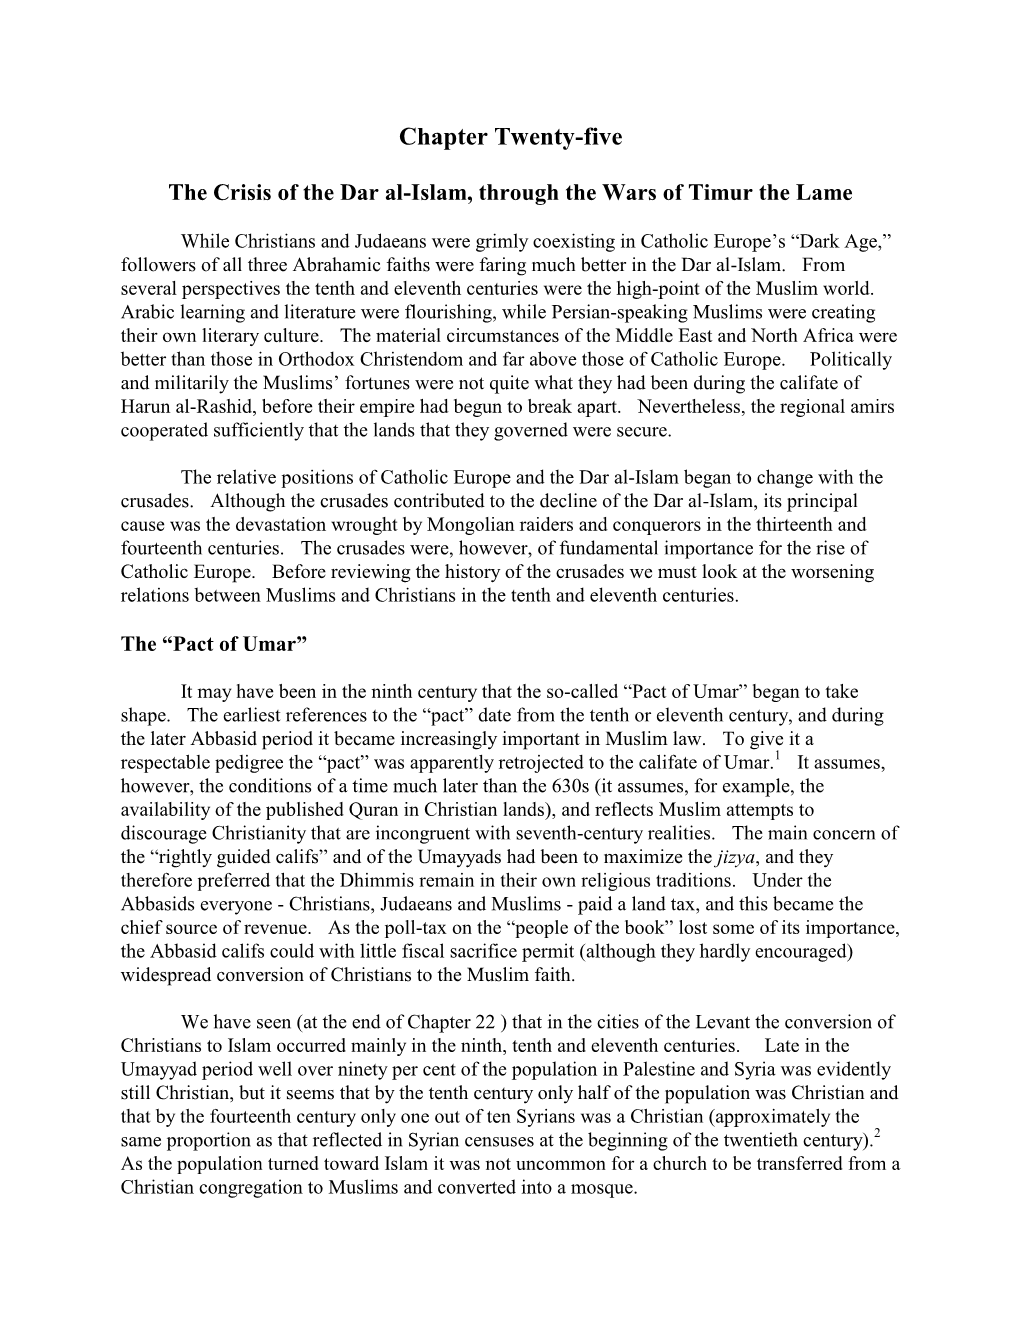 Chapter Twentyfive. the Crisis of the Dar Al Islam